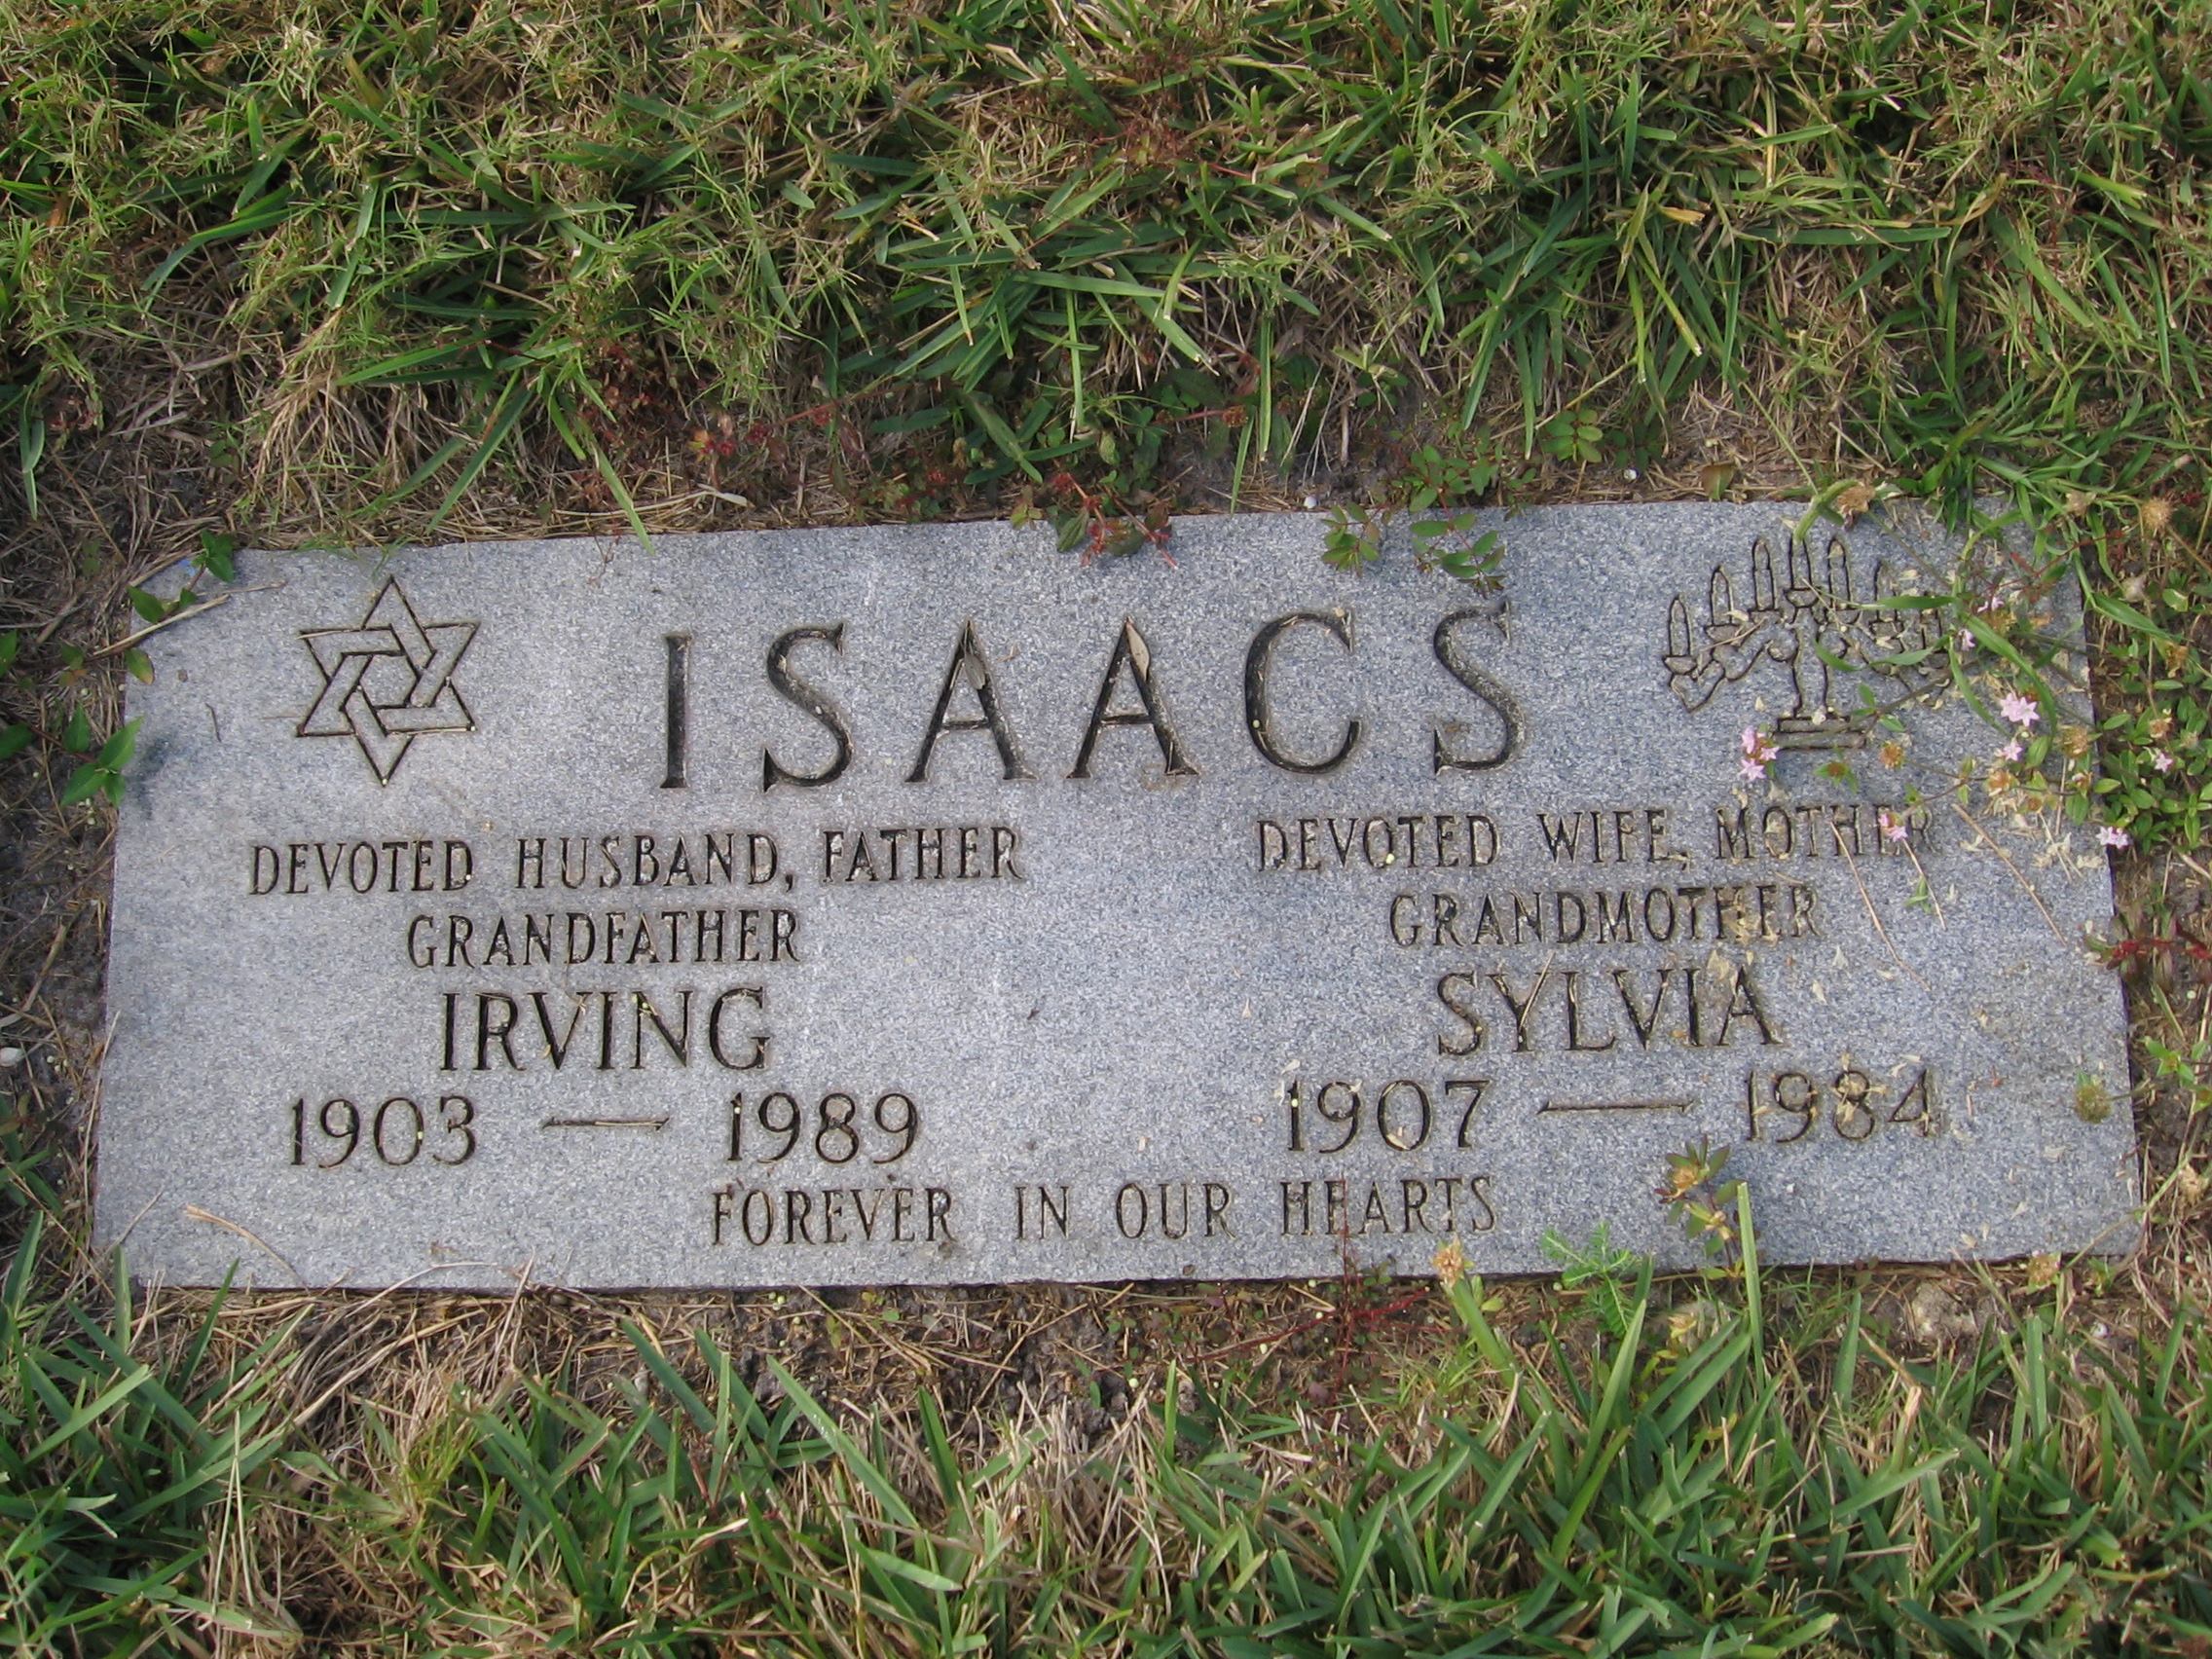 Irving Isaacs